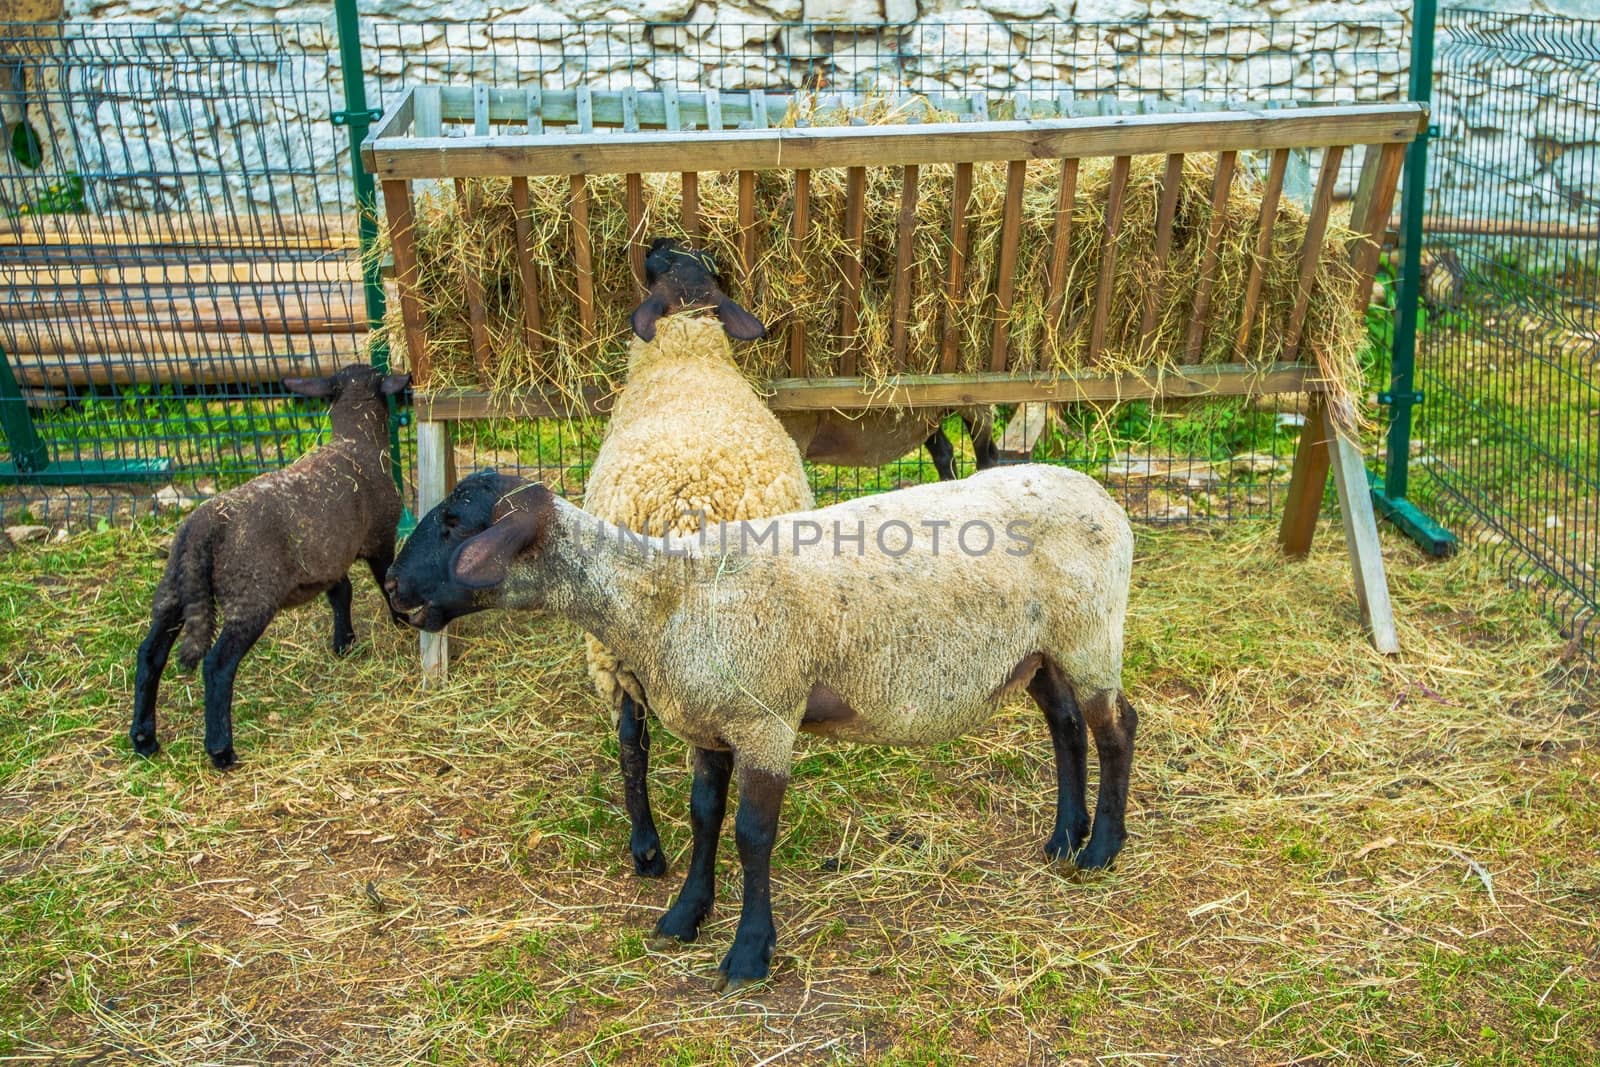 Sheep Feeder. Sheep at the Farm. Agriculture Theme.